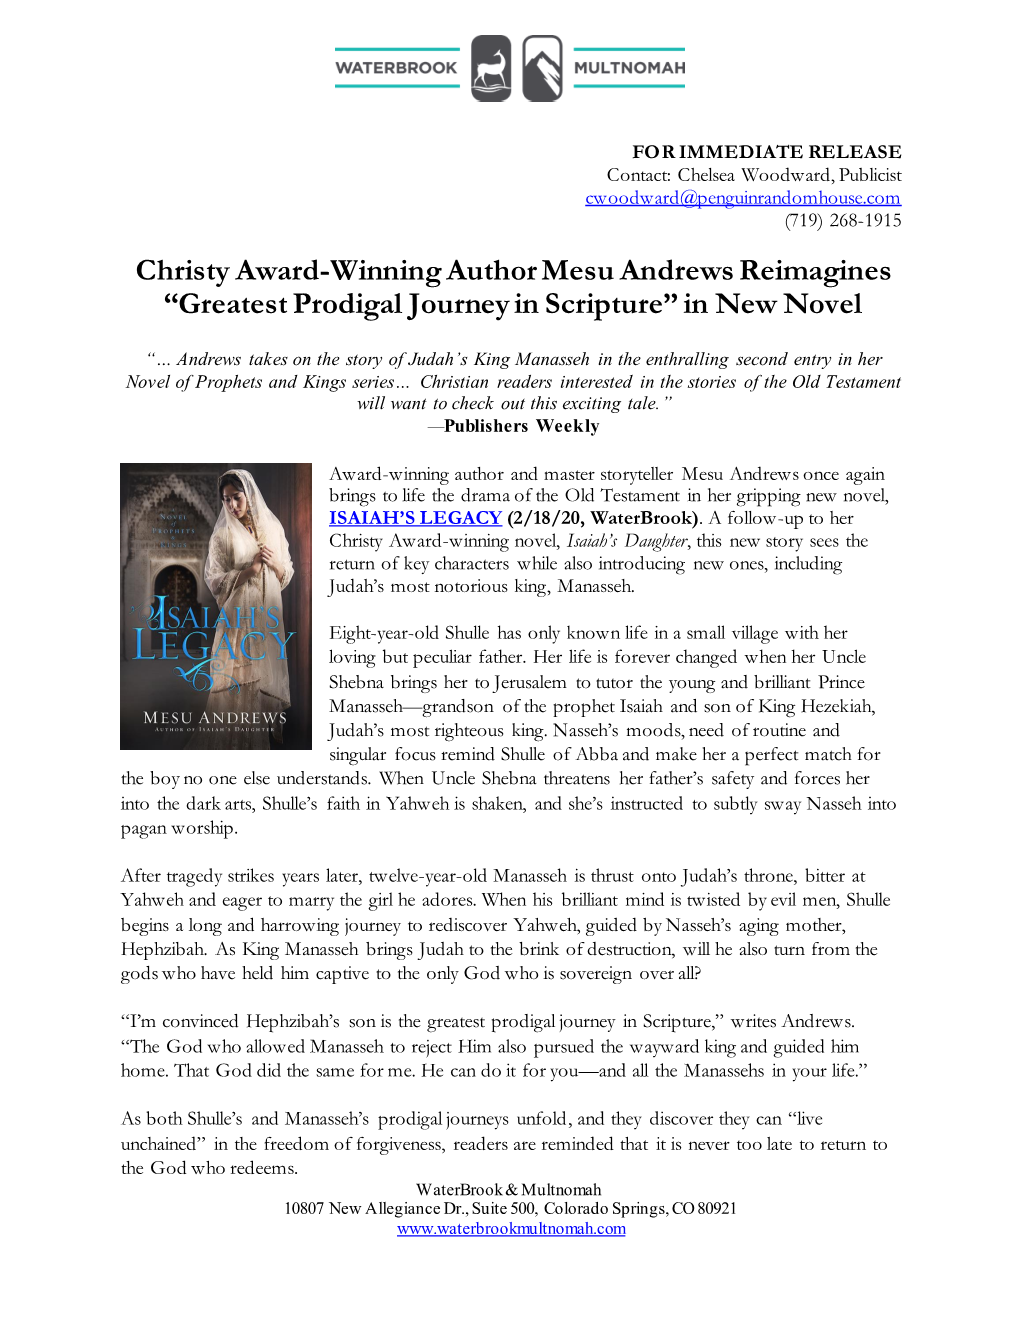 Christy Award-Winning Author Mesu Andrews Reimagines “Greatest Prodigal Journey in Scripture” in New Novel